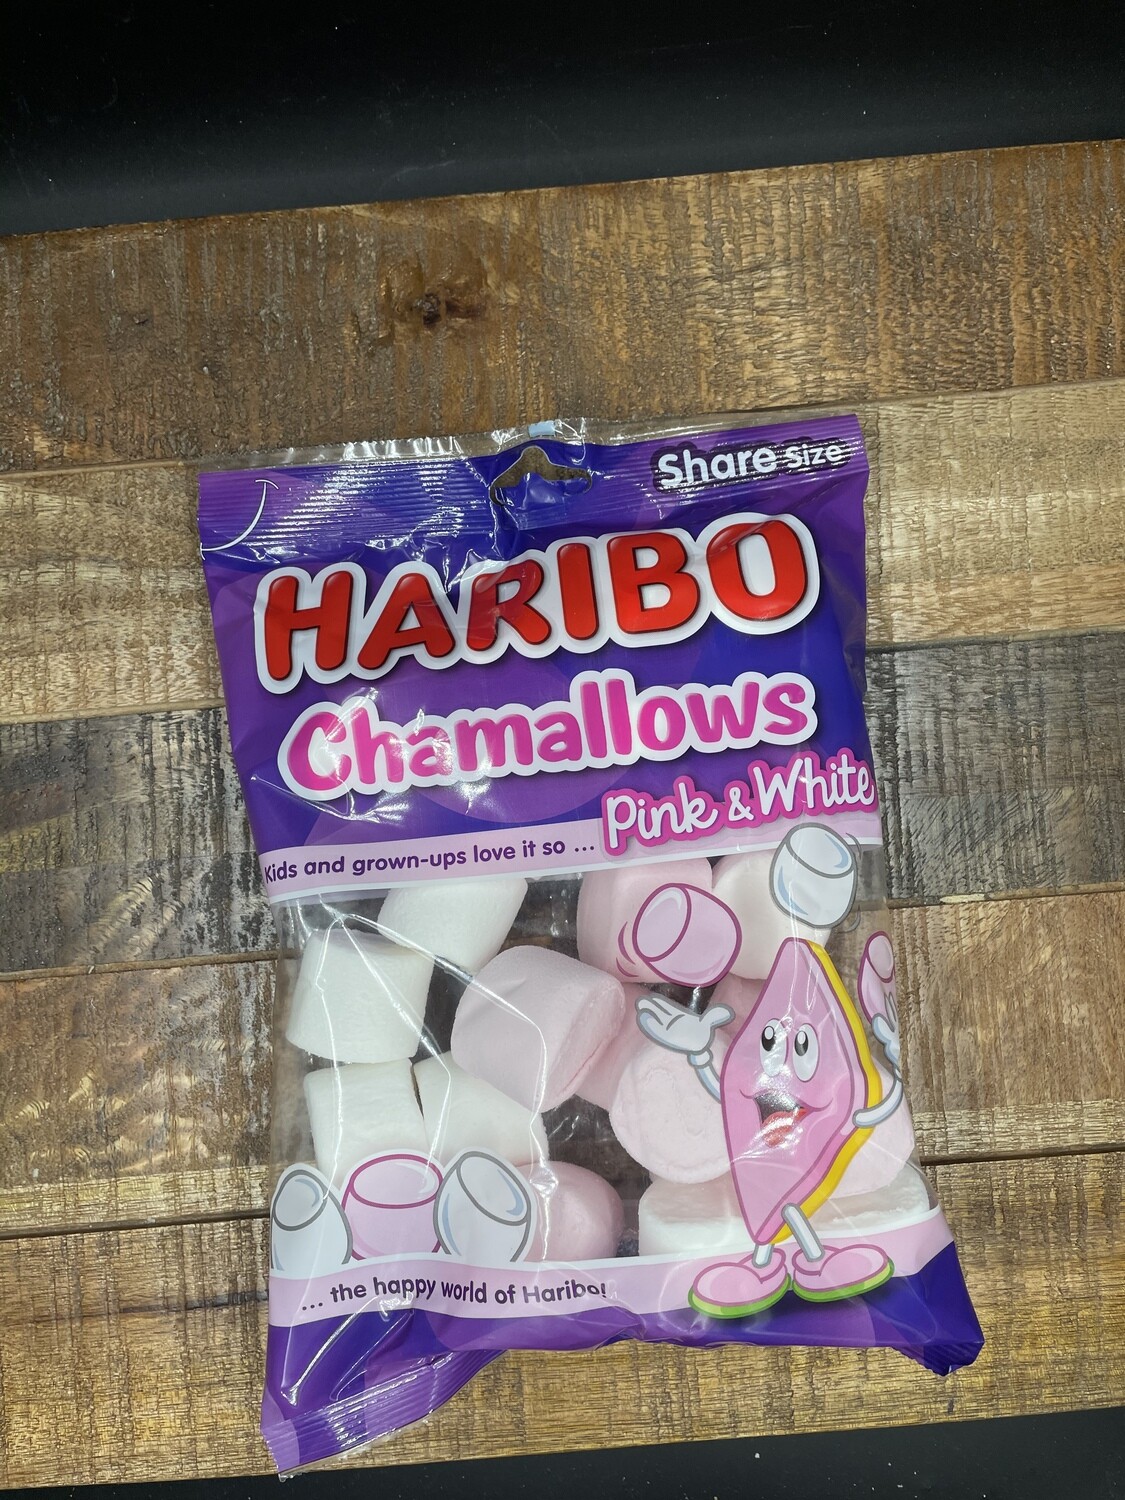 Haribo Chamallows Pink & White 140g